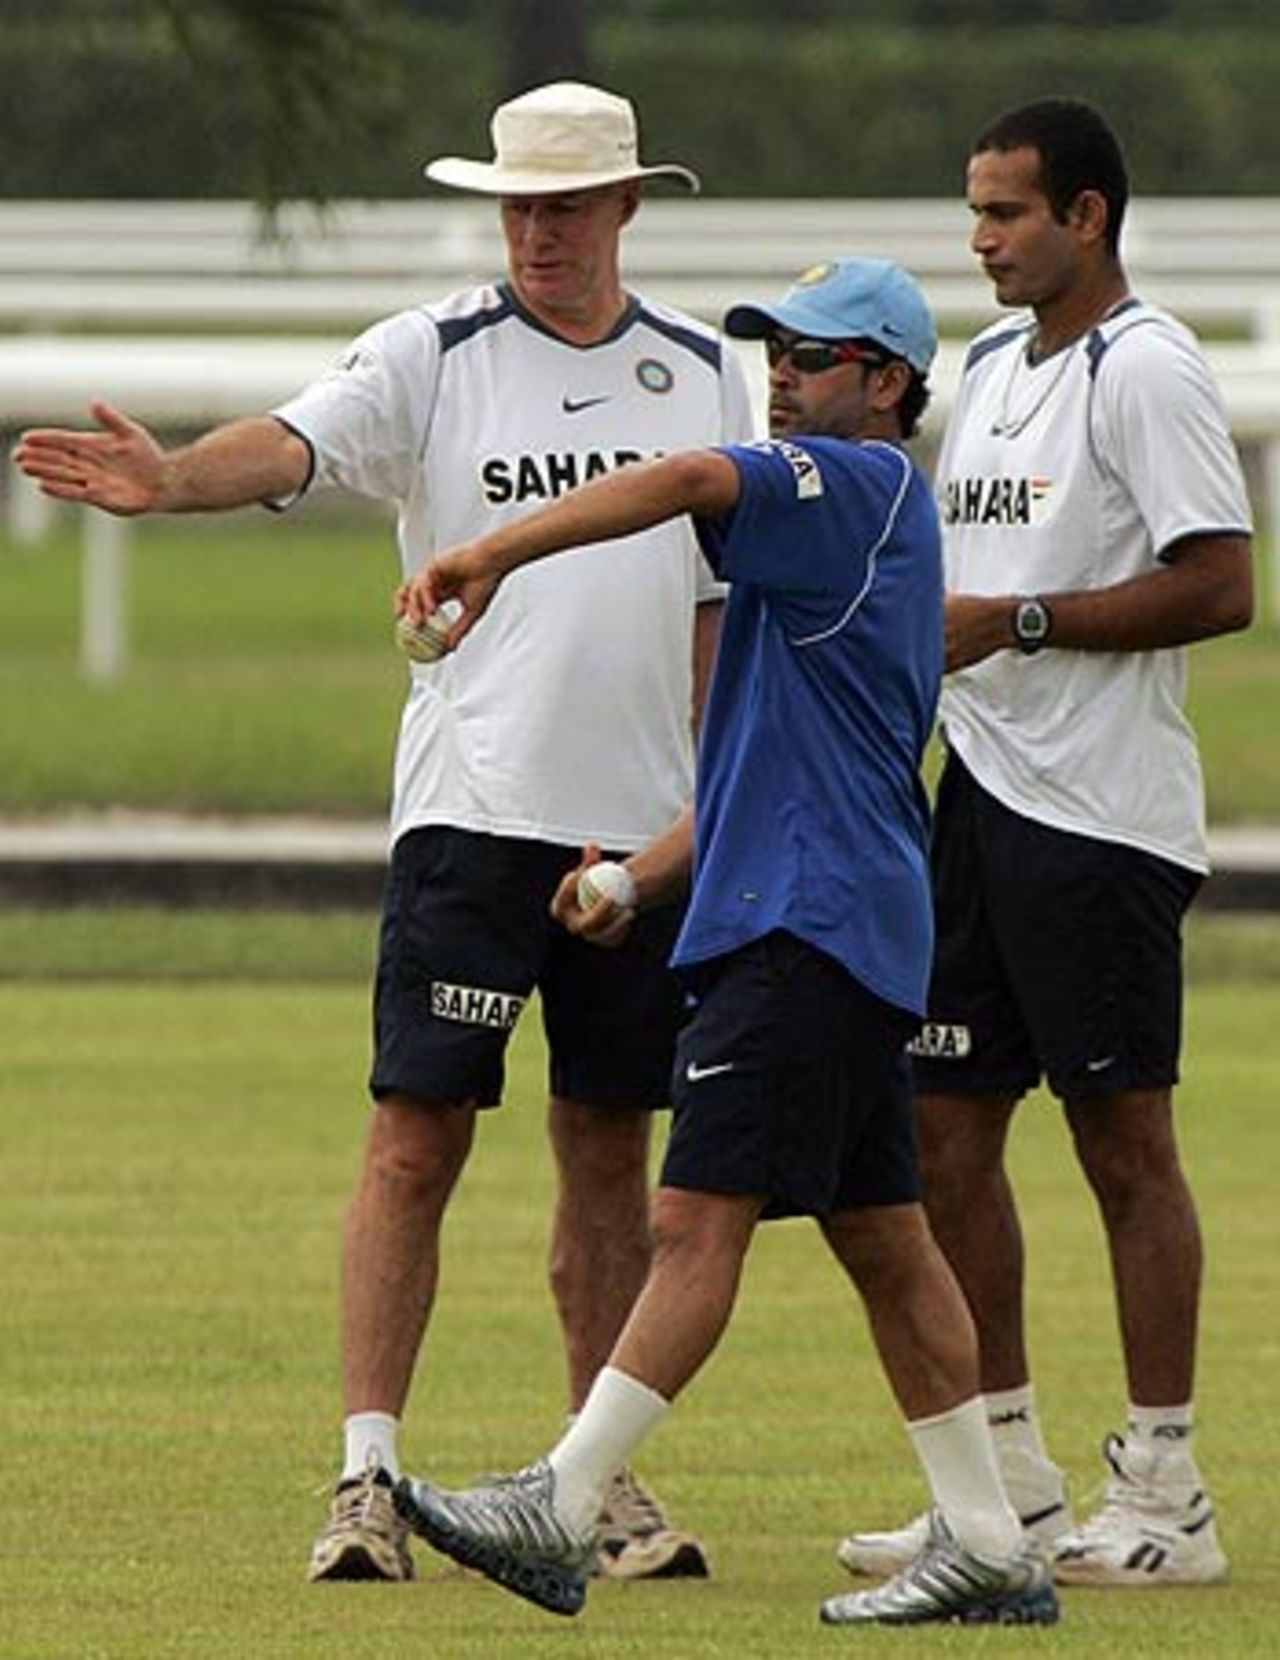 Greg Chappell, Sachin Tendulkar and Irfan Pathan during a training session, Kinrara Academy Oval, Kuala Lumpur, September 15, 2006